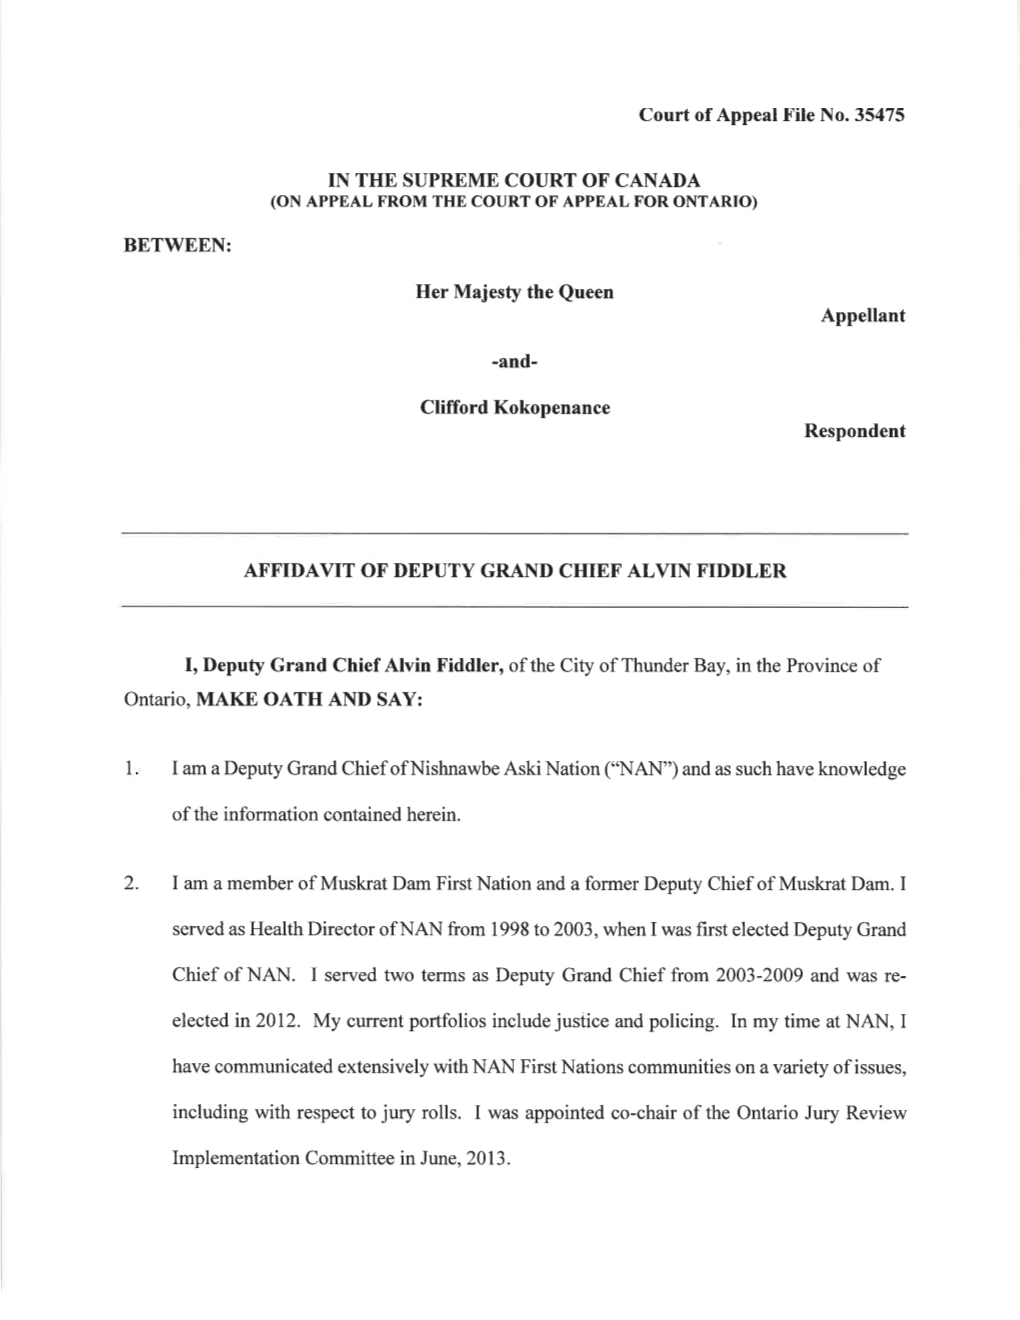 Affidavit of Deputy Grand Chief, Alvin Fiddler